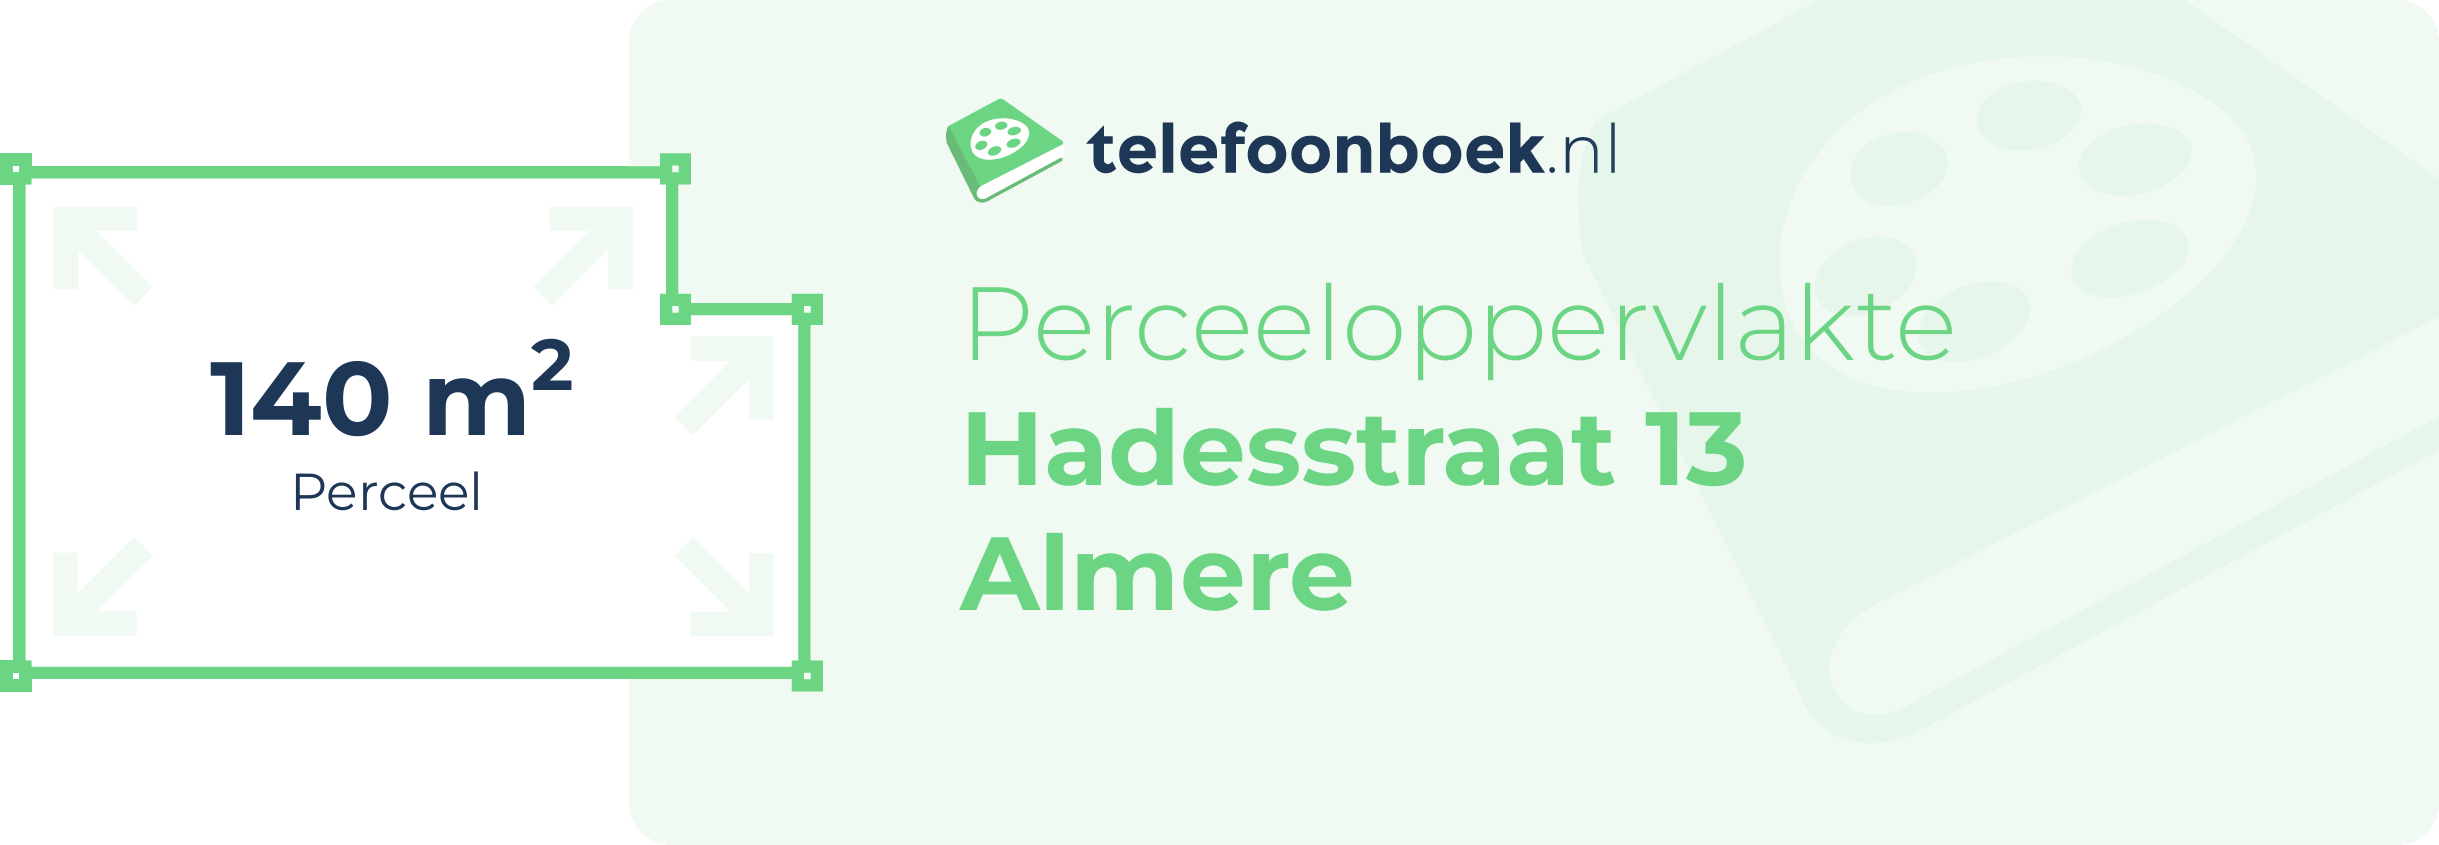 Perceeloppervlakte Hadesstraat 13 Almere